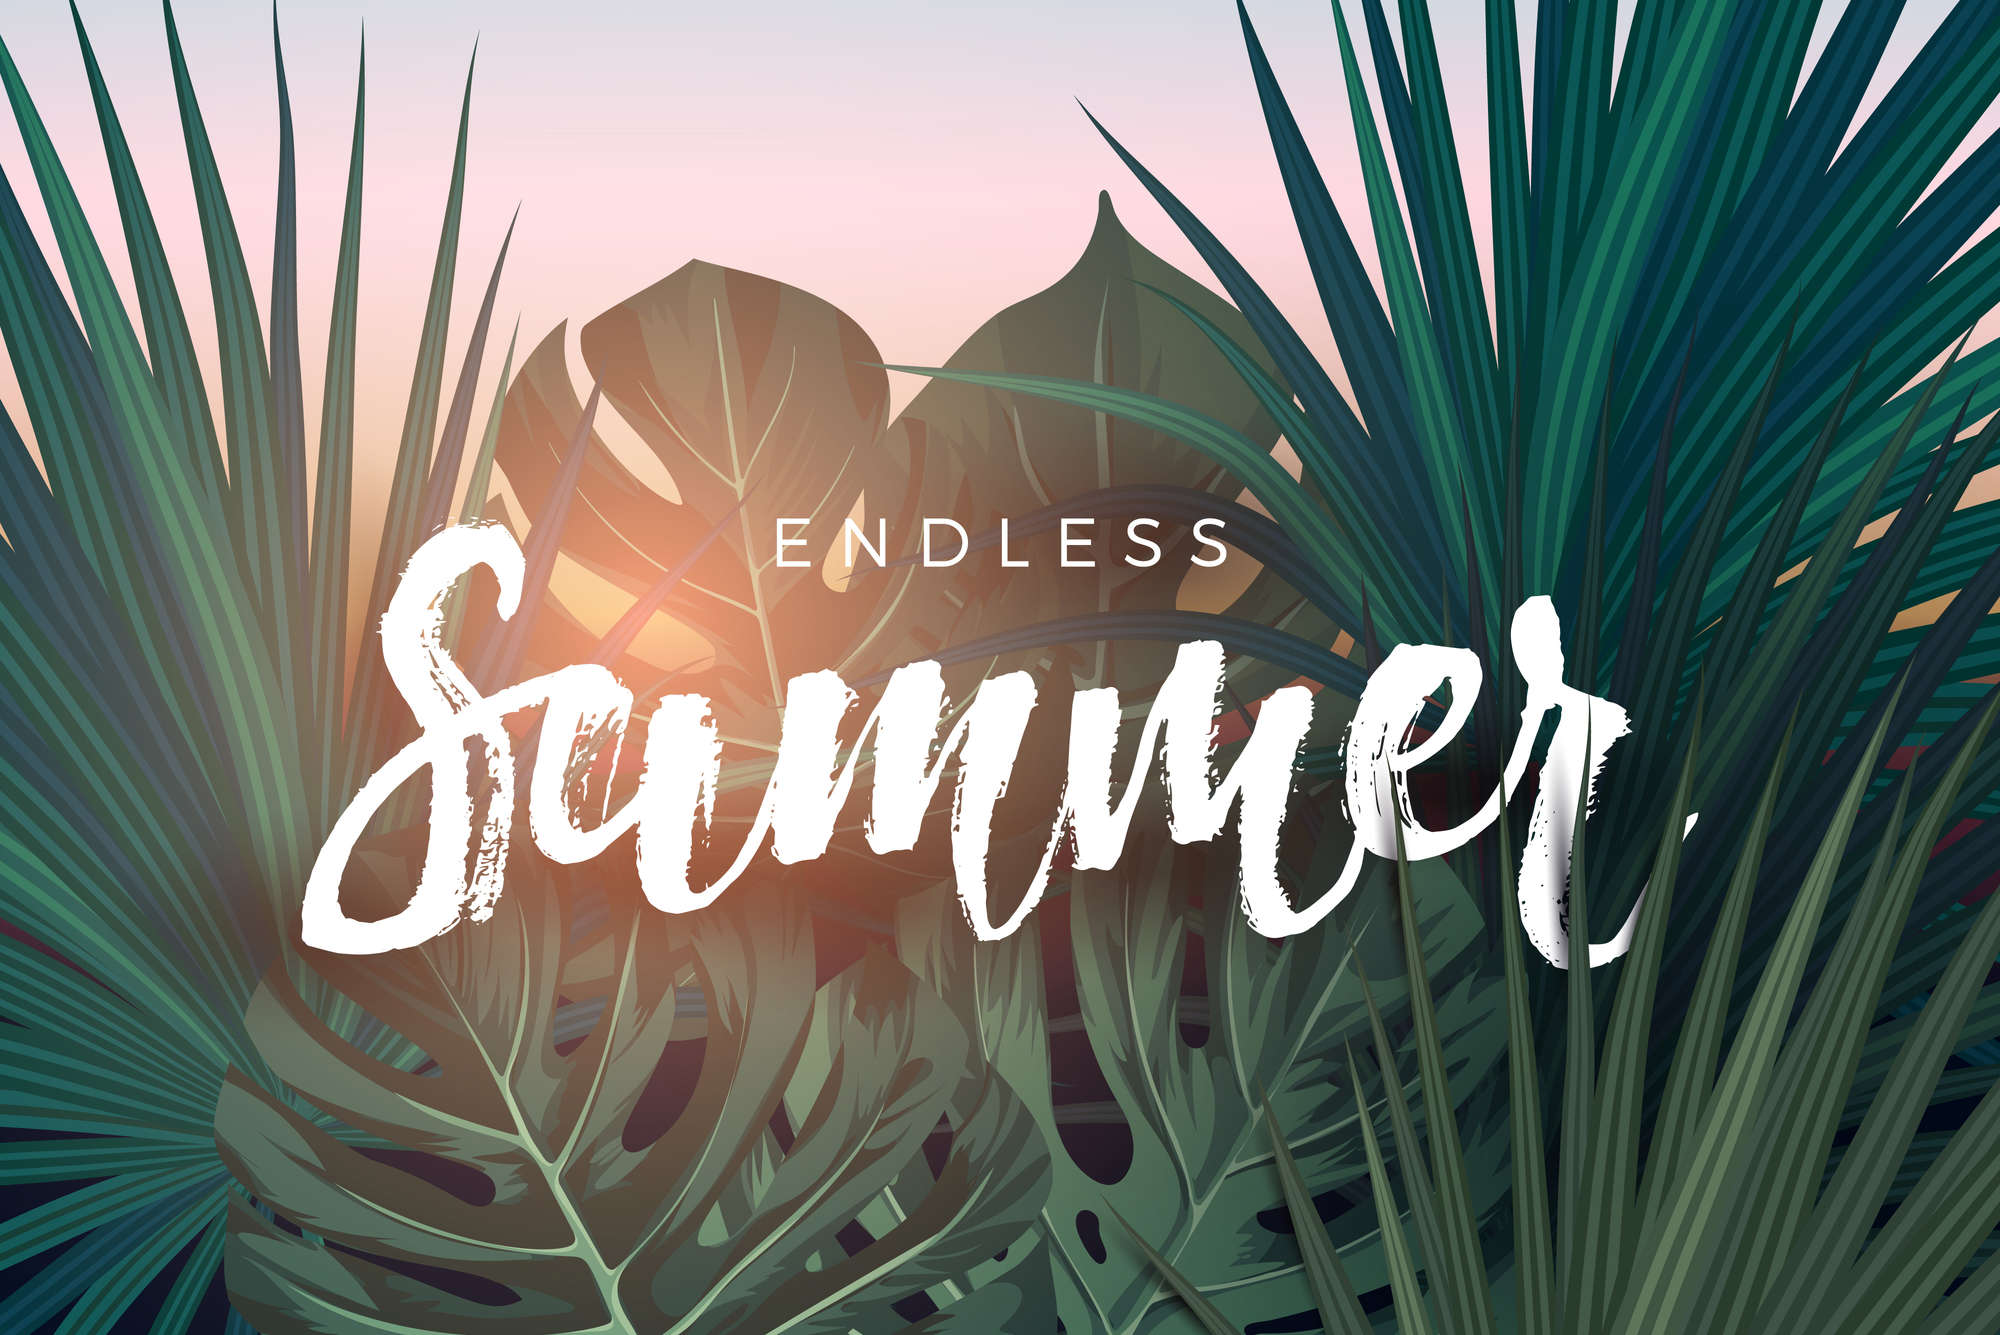             Grafik Fototapete "Endless Summer" Schriftzug auf Premium Glattvlies
        